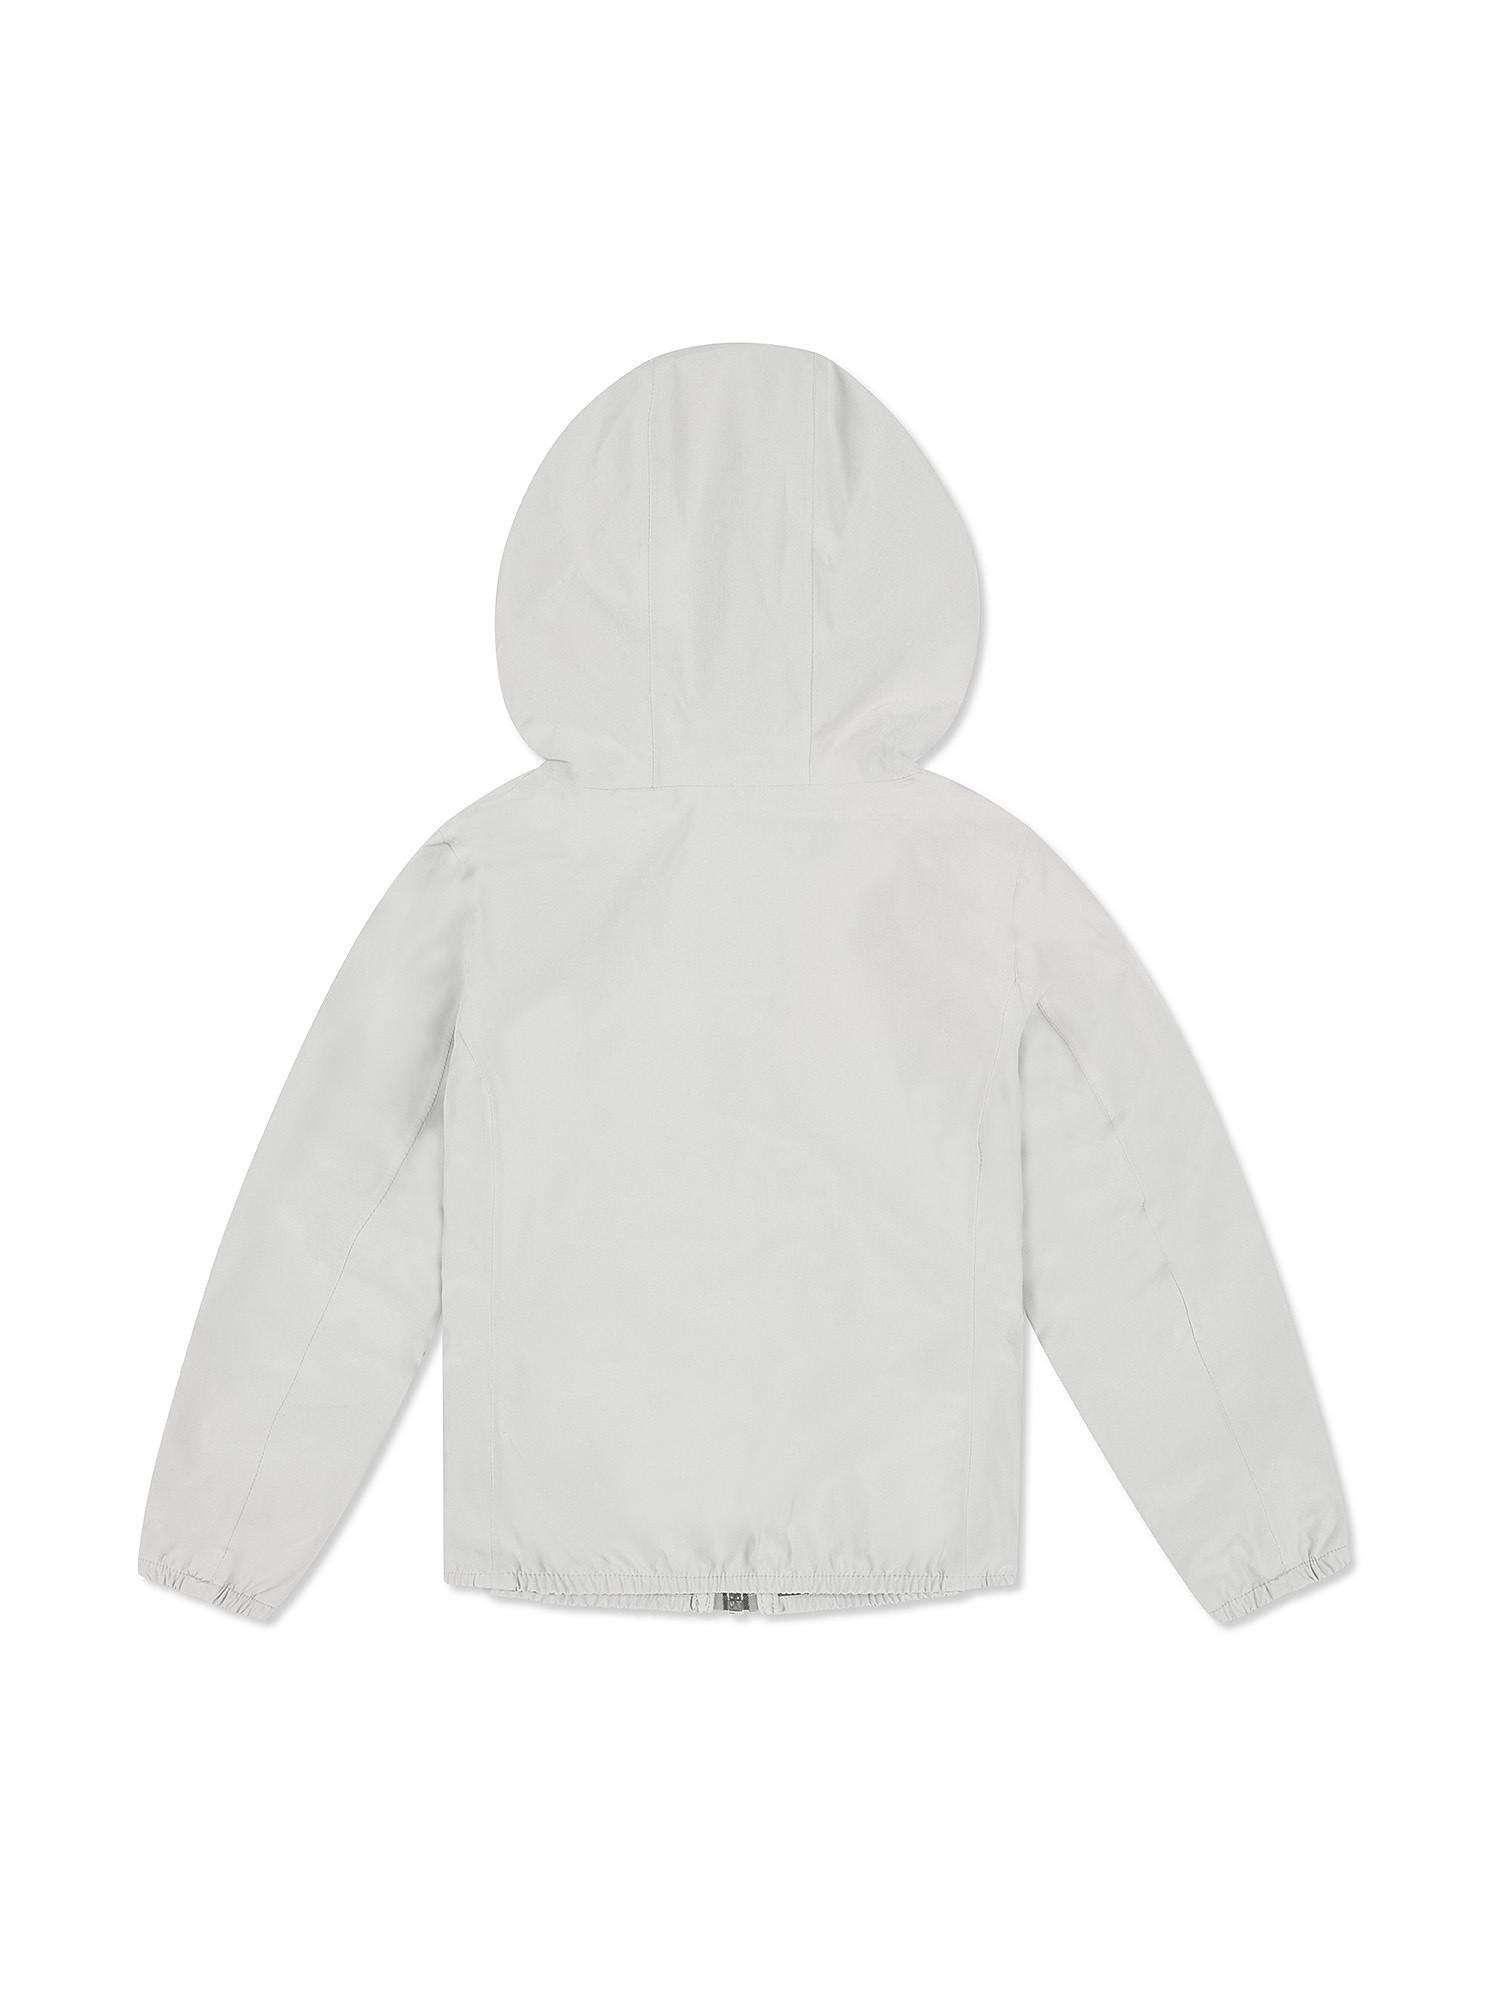 Waterproof baby jacket, White, large image number 1